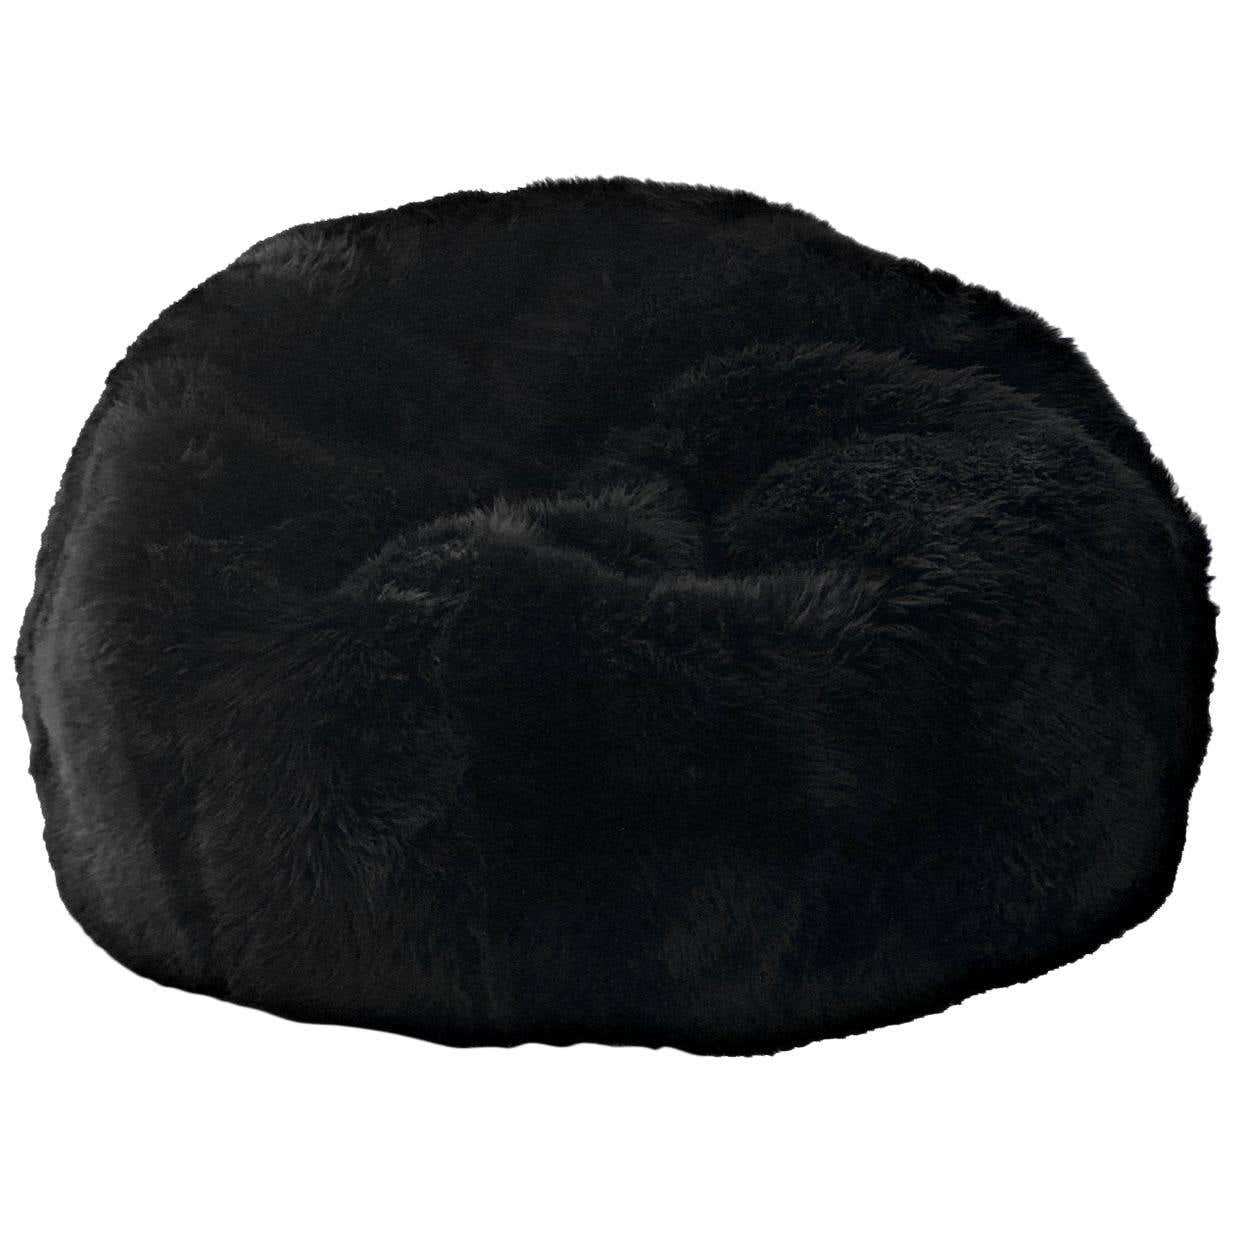 Black Large Sheepskin Bean Bag Chair, Australian Sheepskin, Made in ...